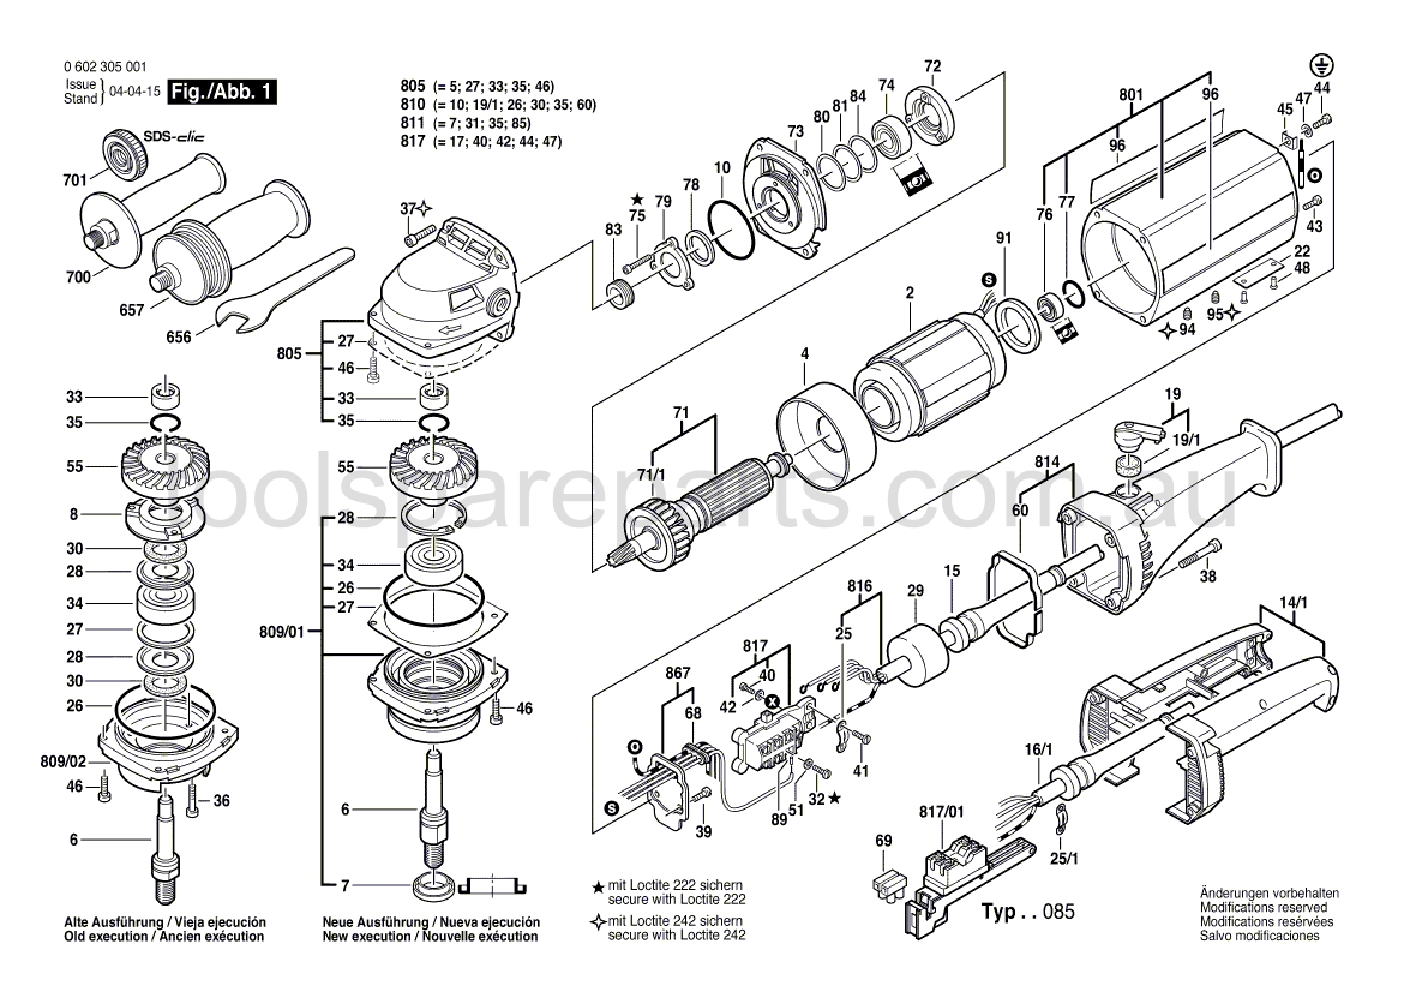 Bosch ---- 0602305011  Diagram 1